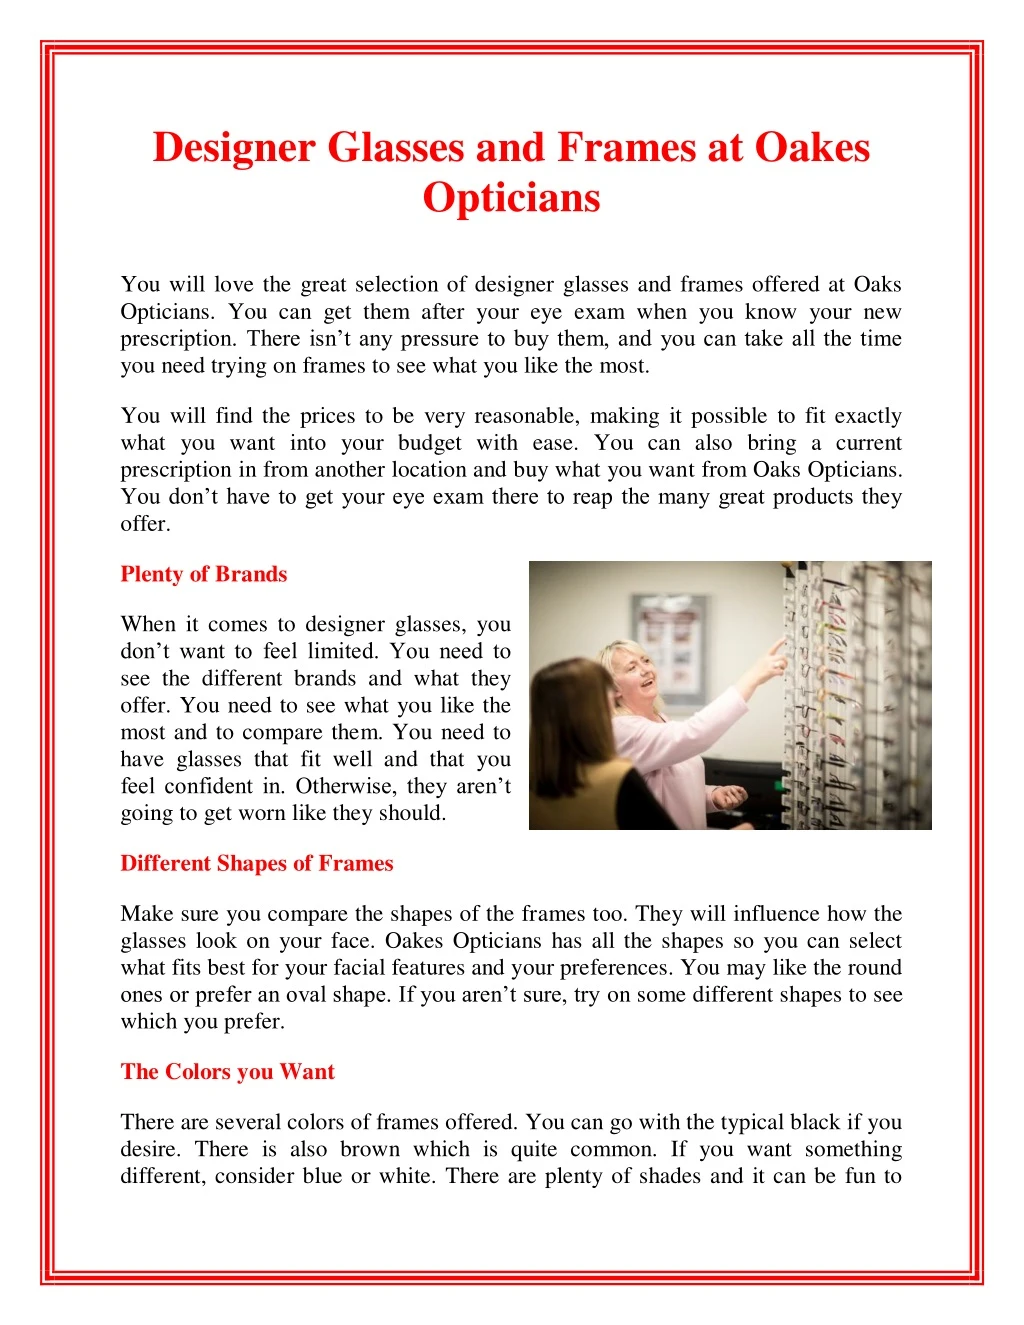 designer glasses and frames at oakes opticians